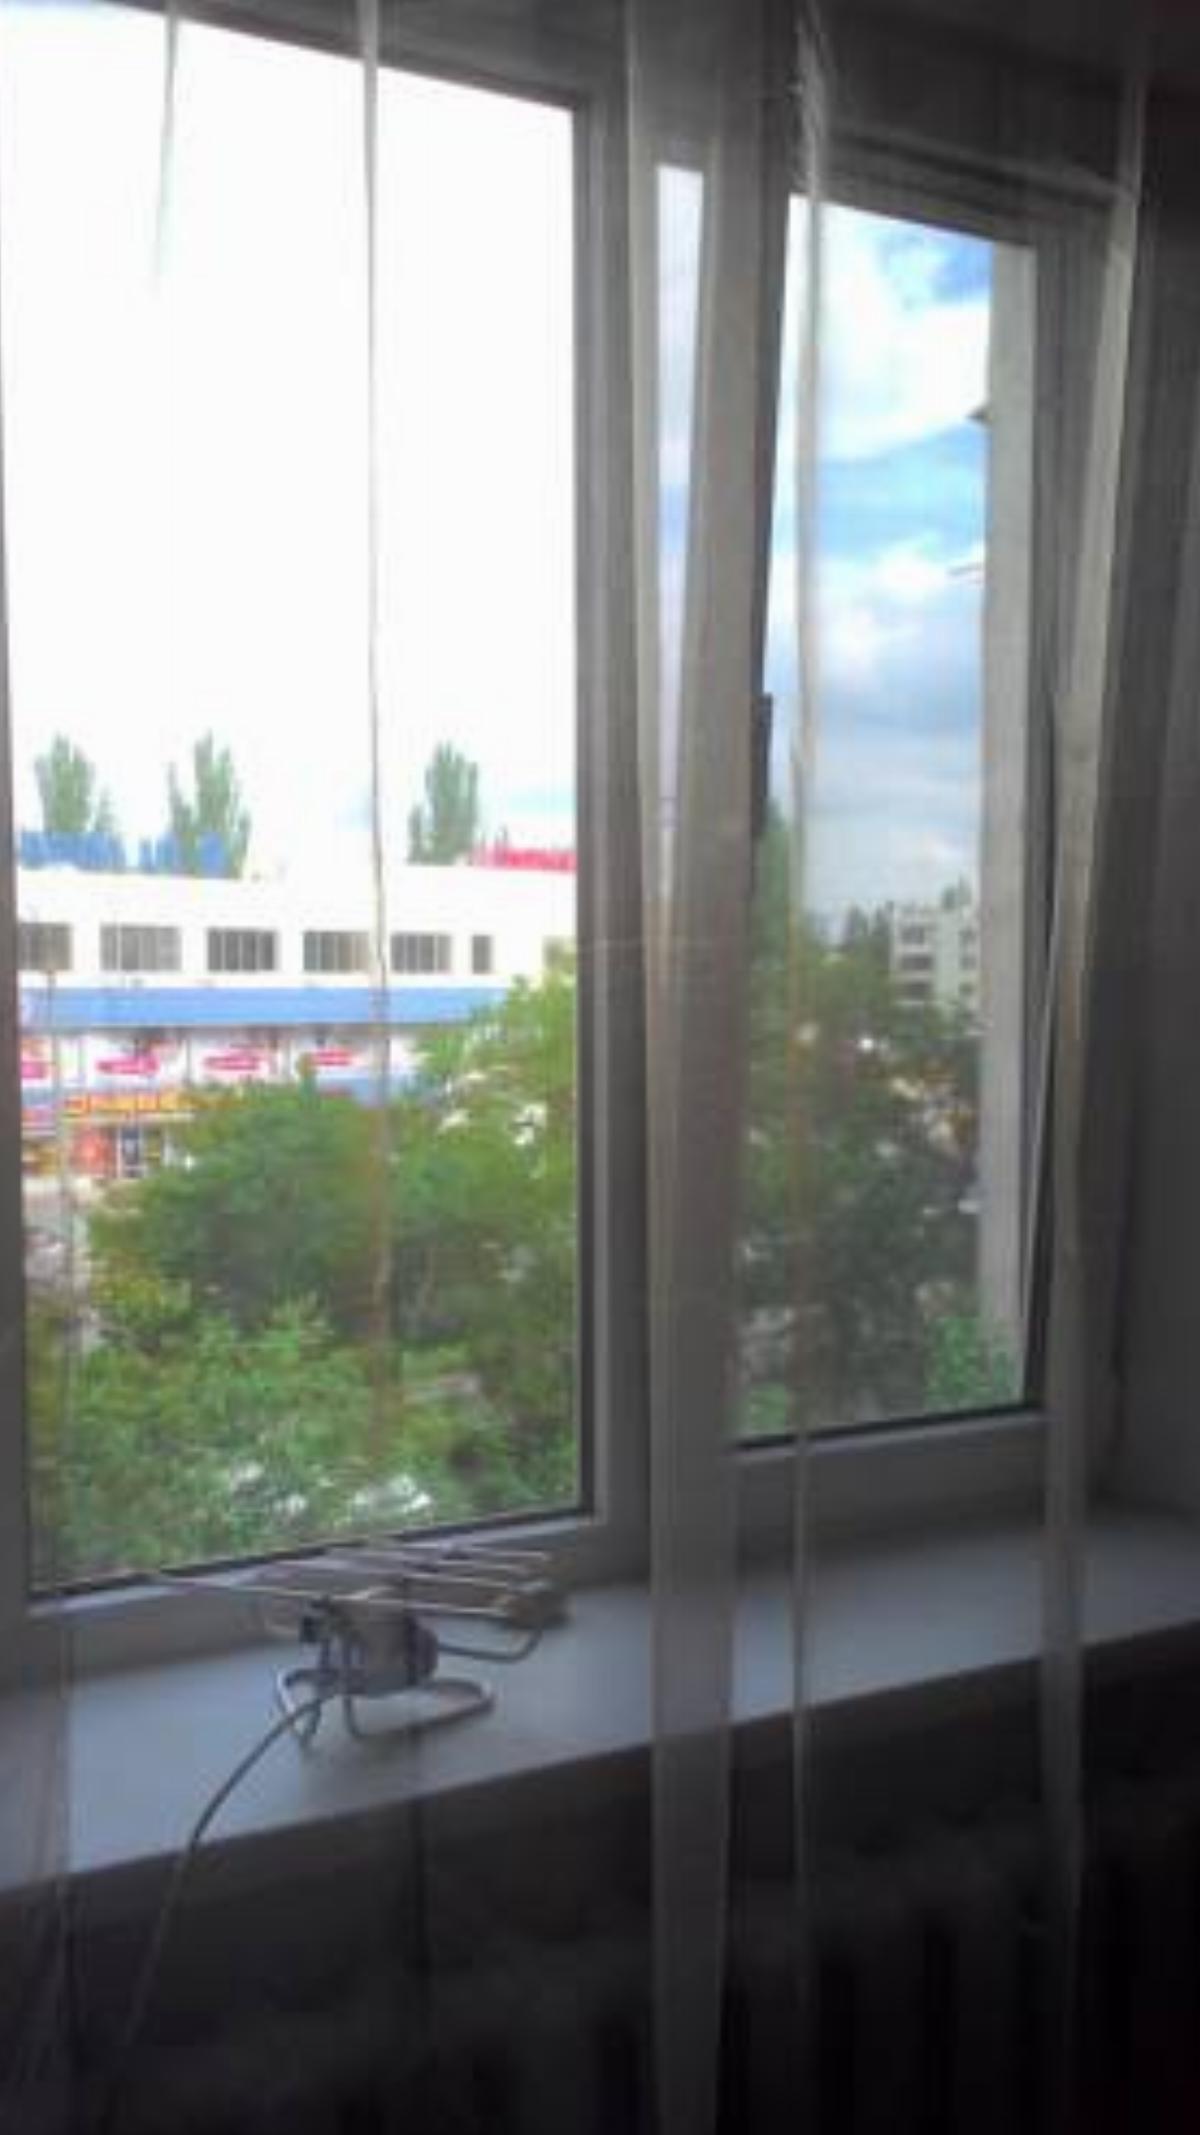 Apartment on Bulvar Starshinova Hotel Feodosiya Crimea